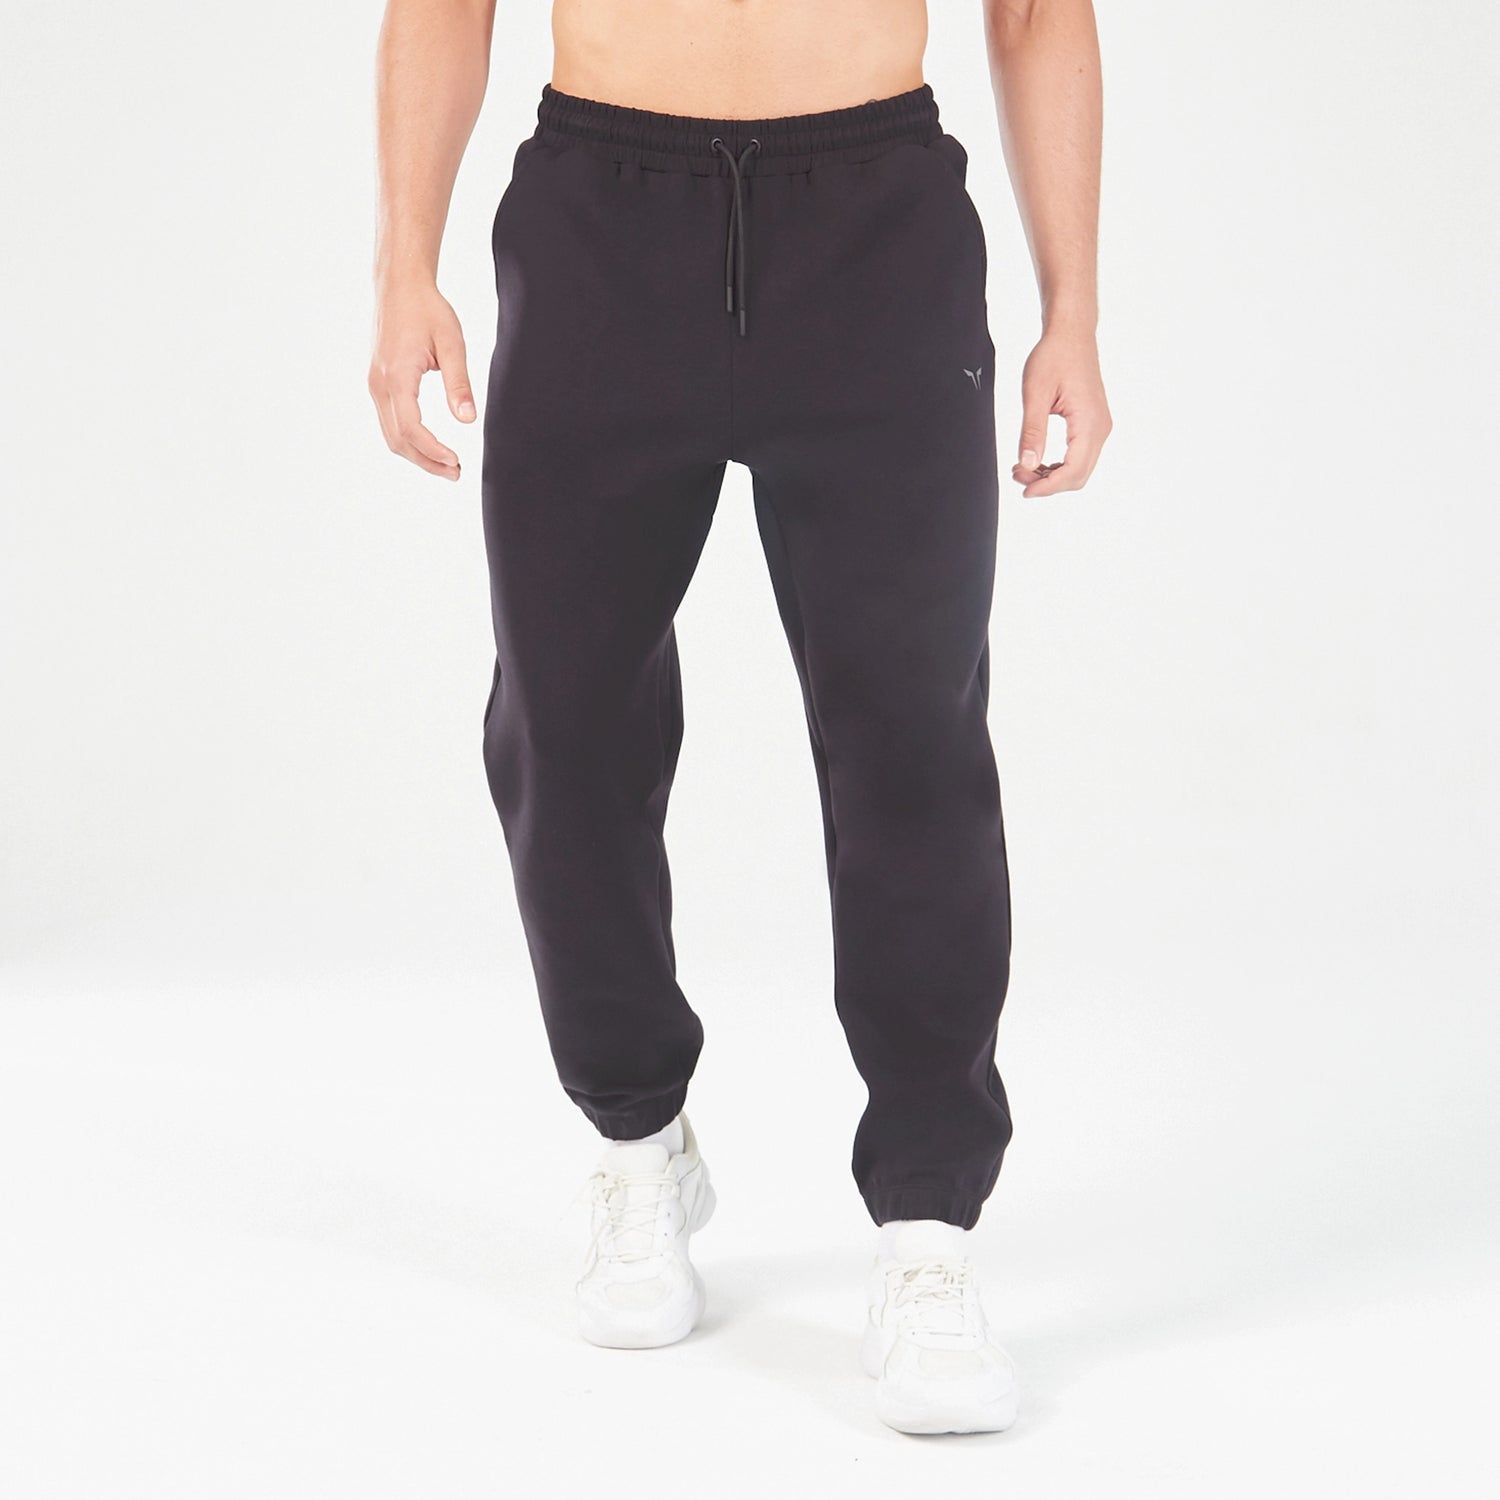 squatwolf-gym-wear-core-level-up-joggers-black-workout-pants-for-men